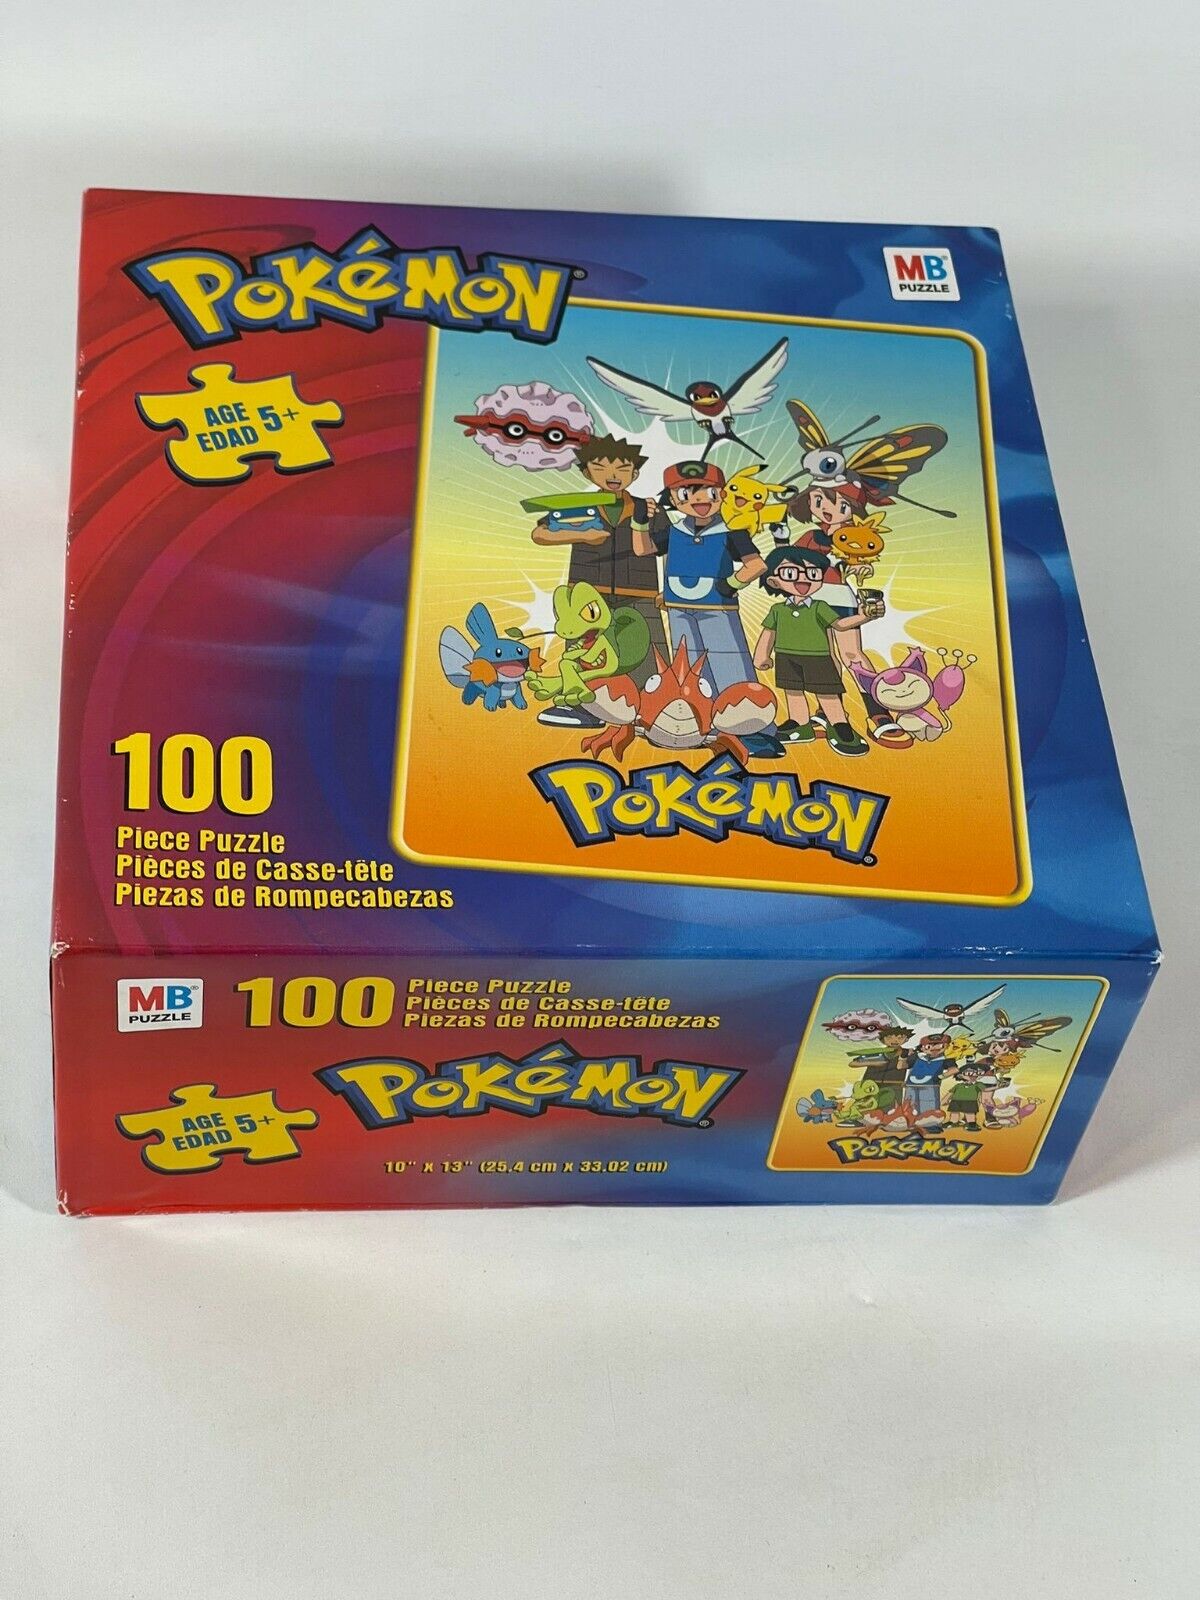 2004 POKEMON 100 pc piece Puzzle MB-Hasbro featuring Pokemon gang NEW